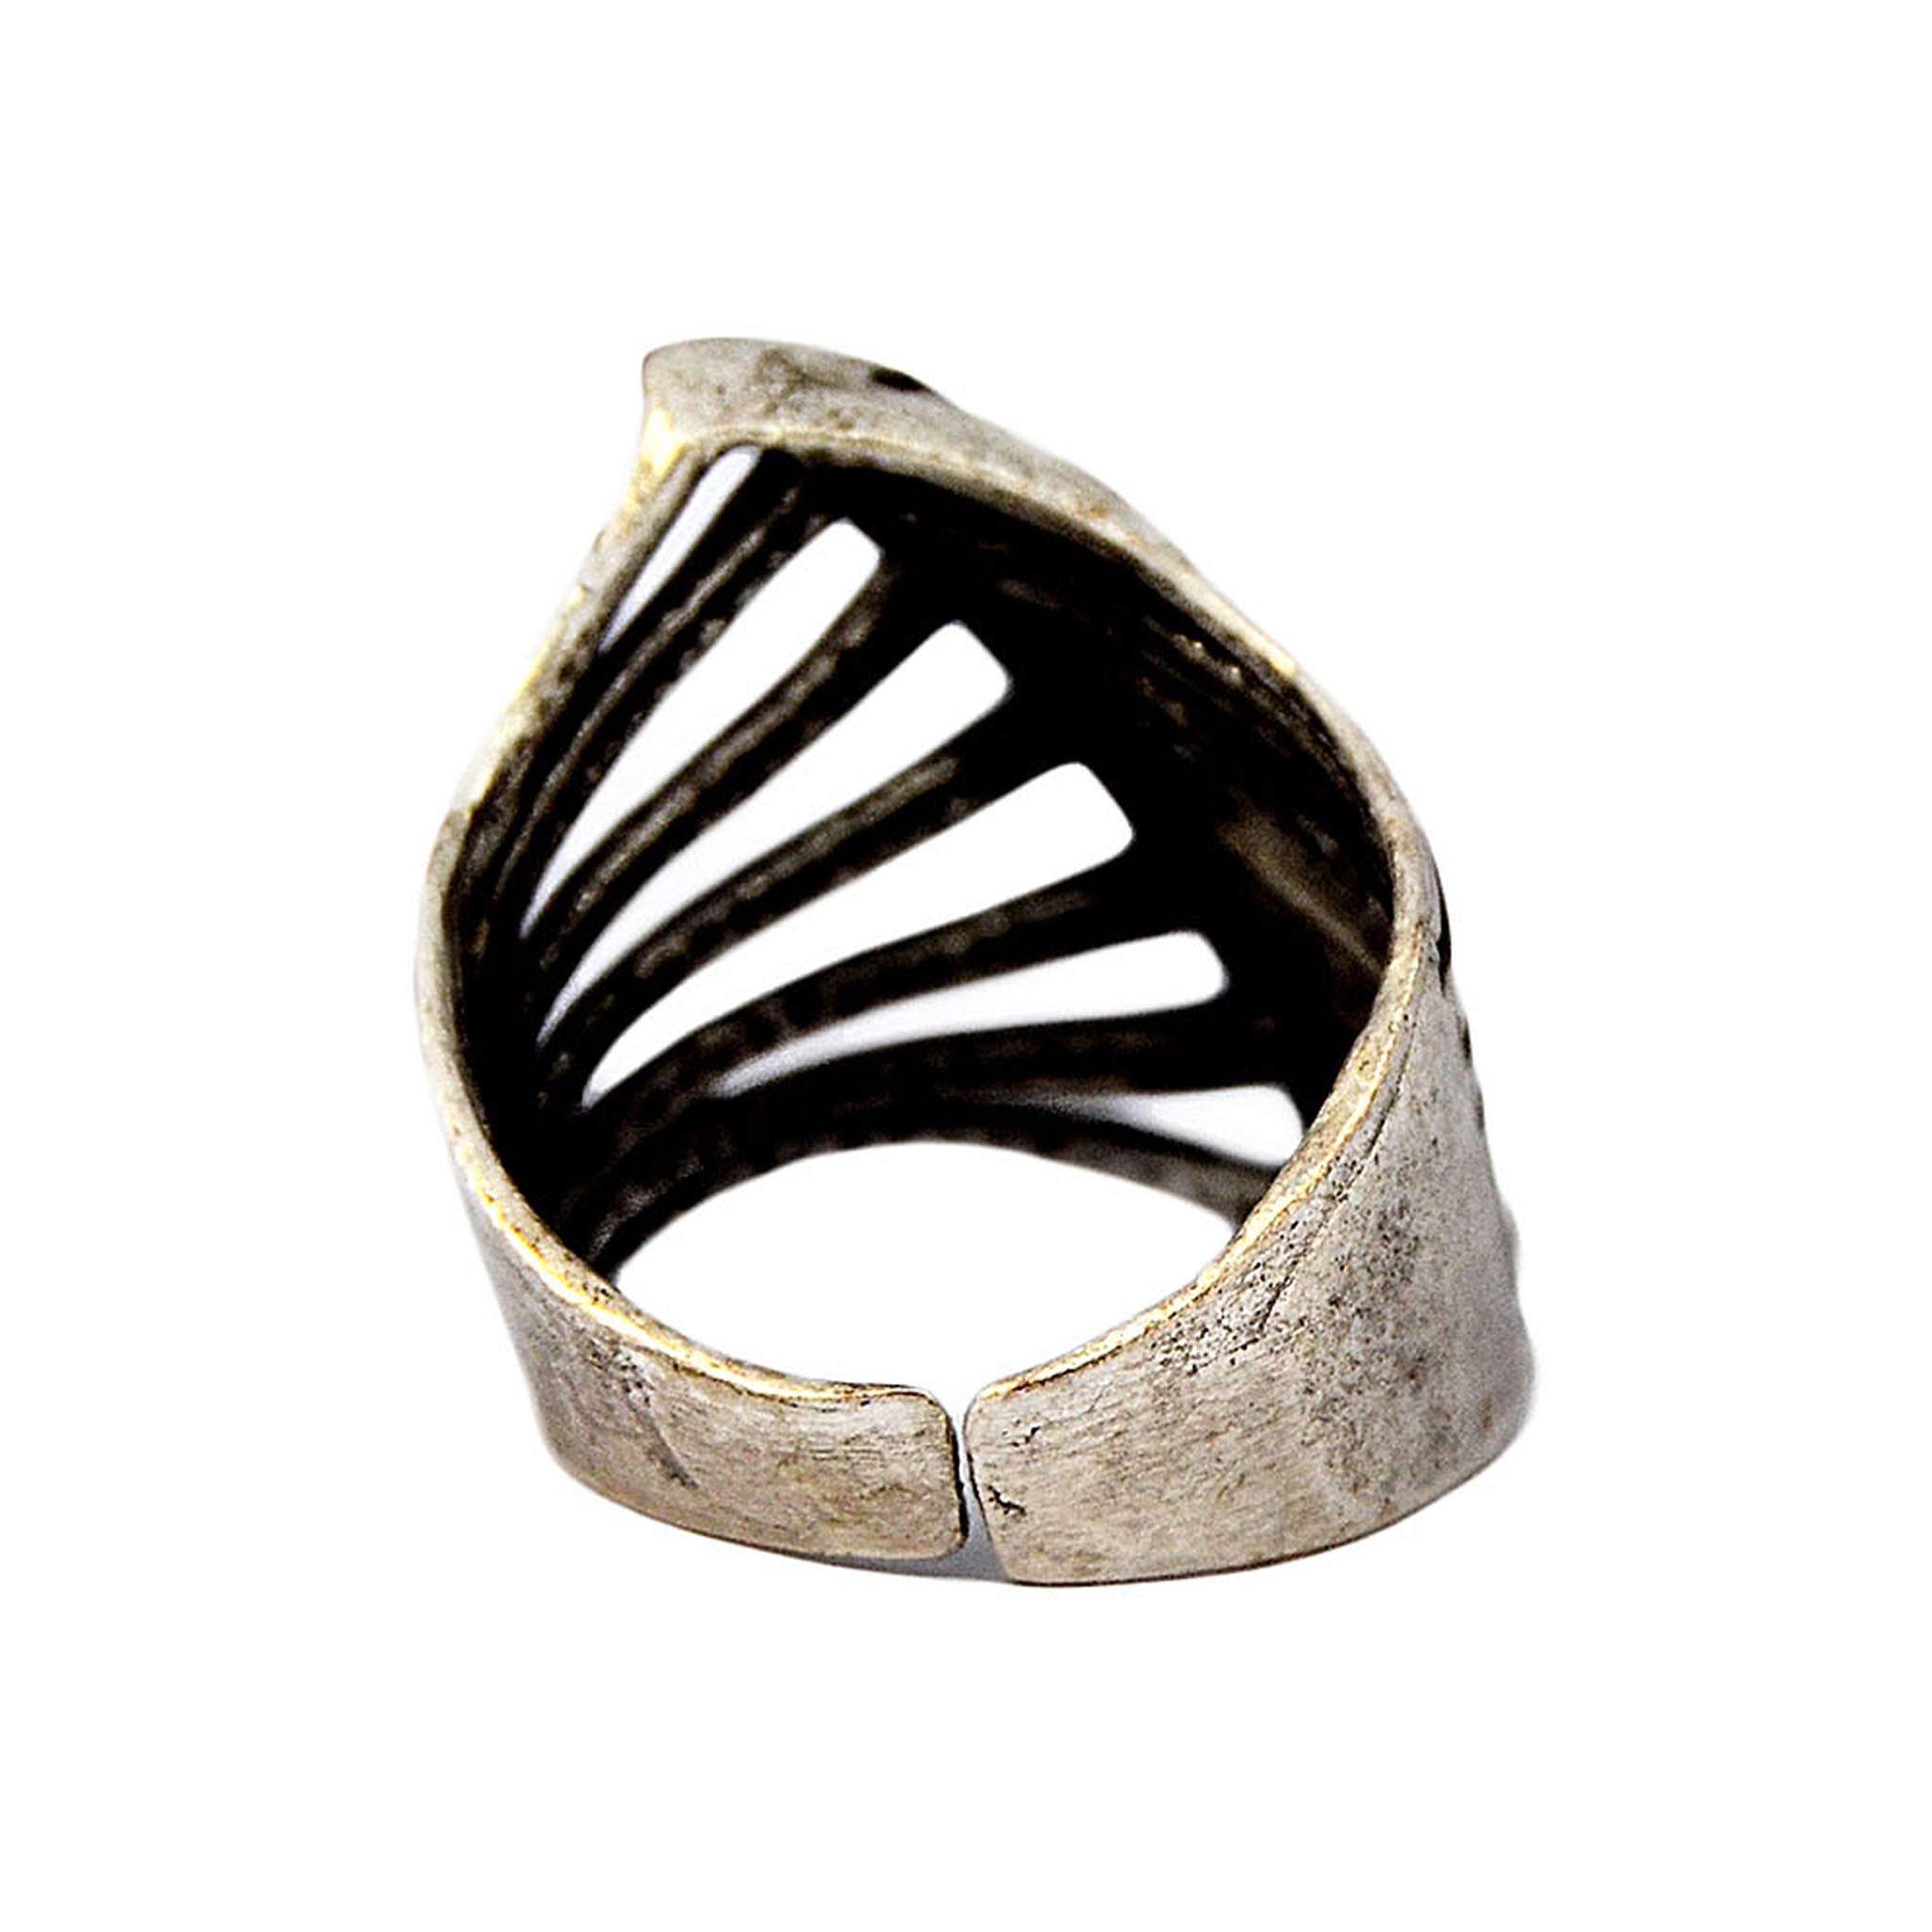 Silver boho ring